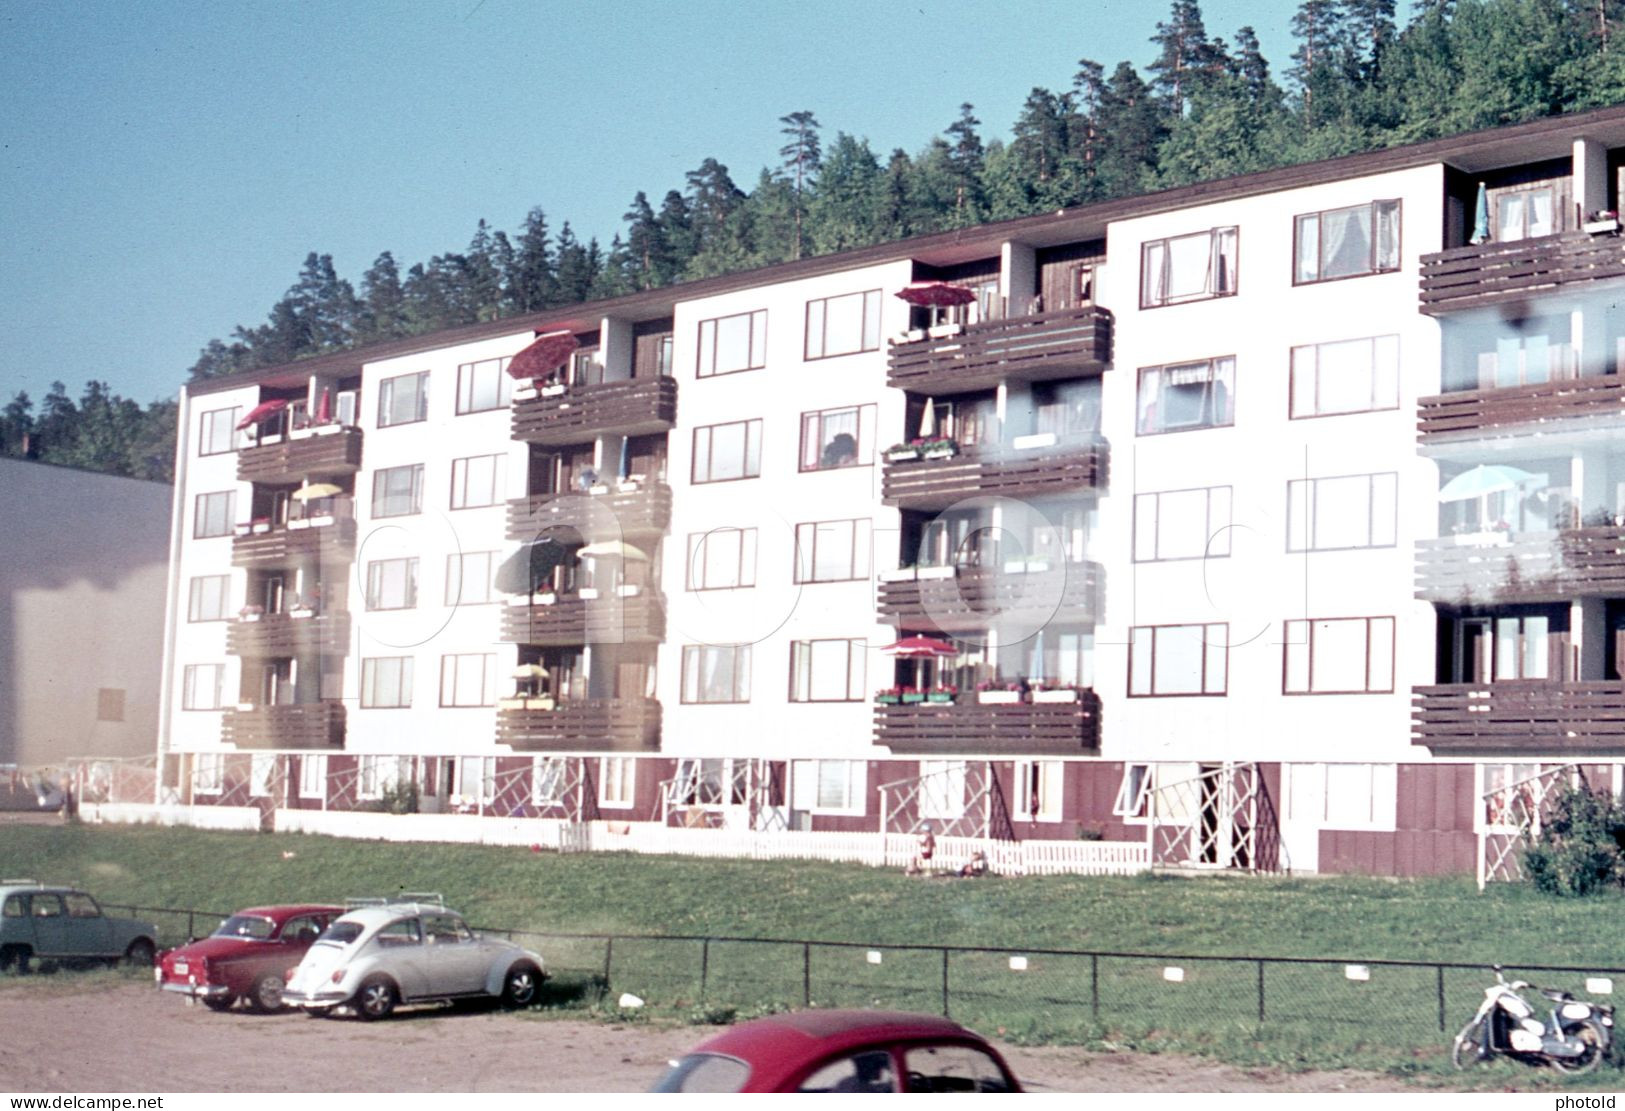 12 SLIDES SET 1977 OSLO NORWAY NORGE AMATEUR 35mm SLIDE PHOTO 35mm DIAPOSITIVE SLIDE Not PHOTO No FOTO NB4105 - Diapositives